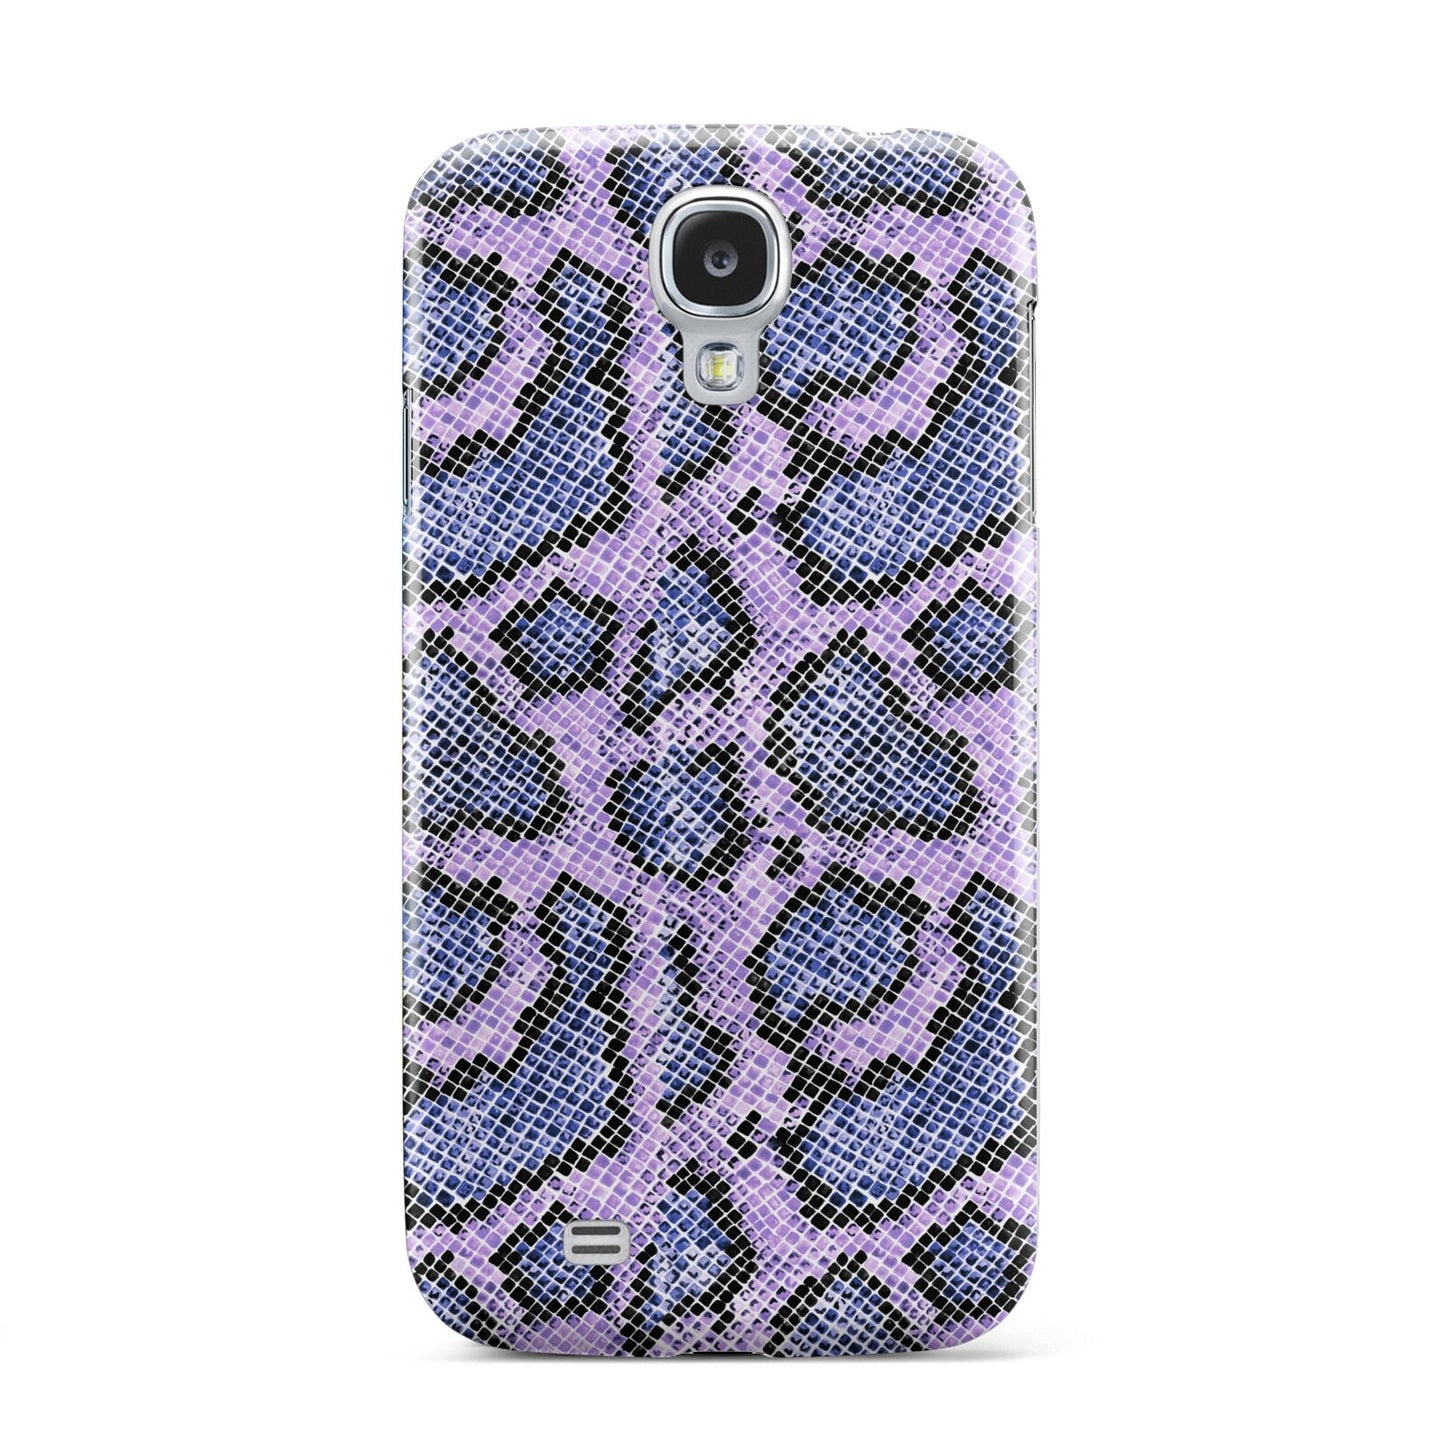 Purple And Blue Snakeskin Samsung Galaxy S4 Case